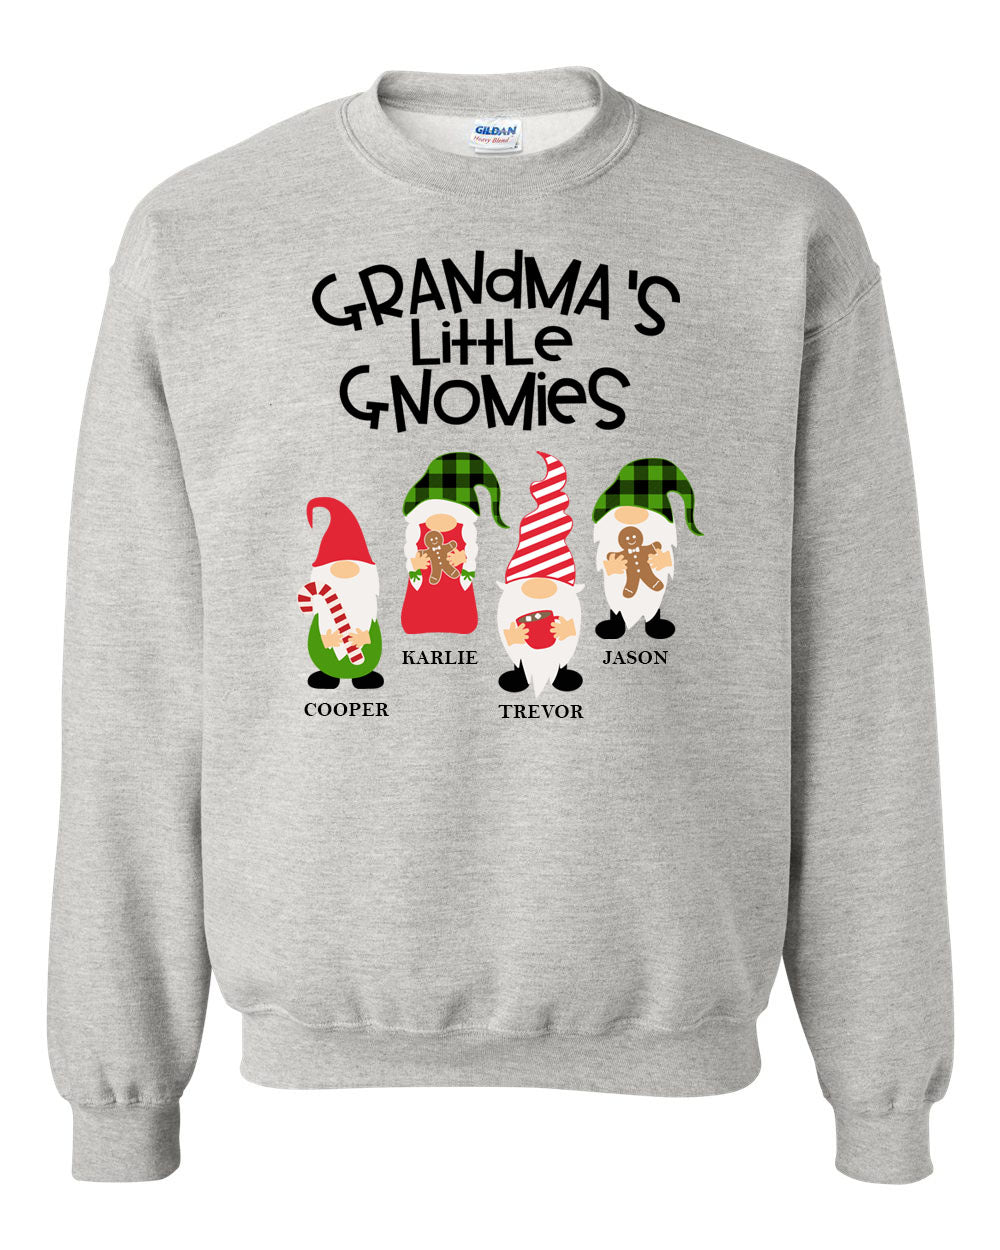 Grandma's Little Gnomies non hooded sweatshirt